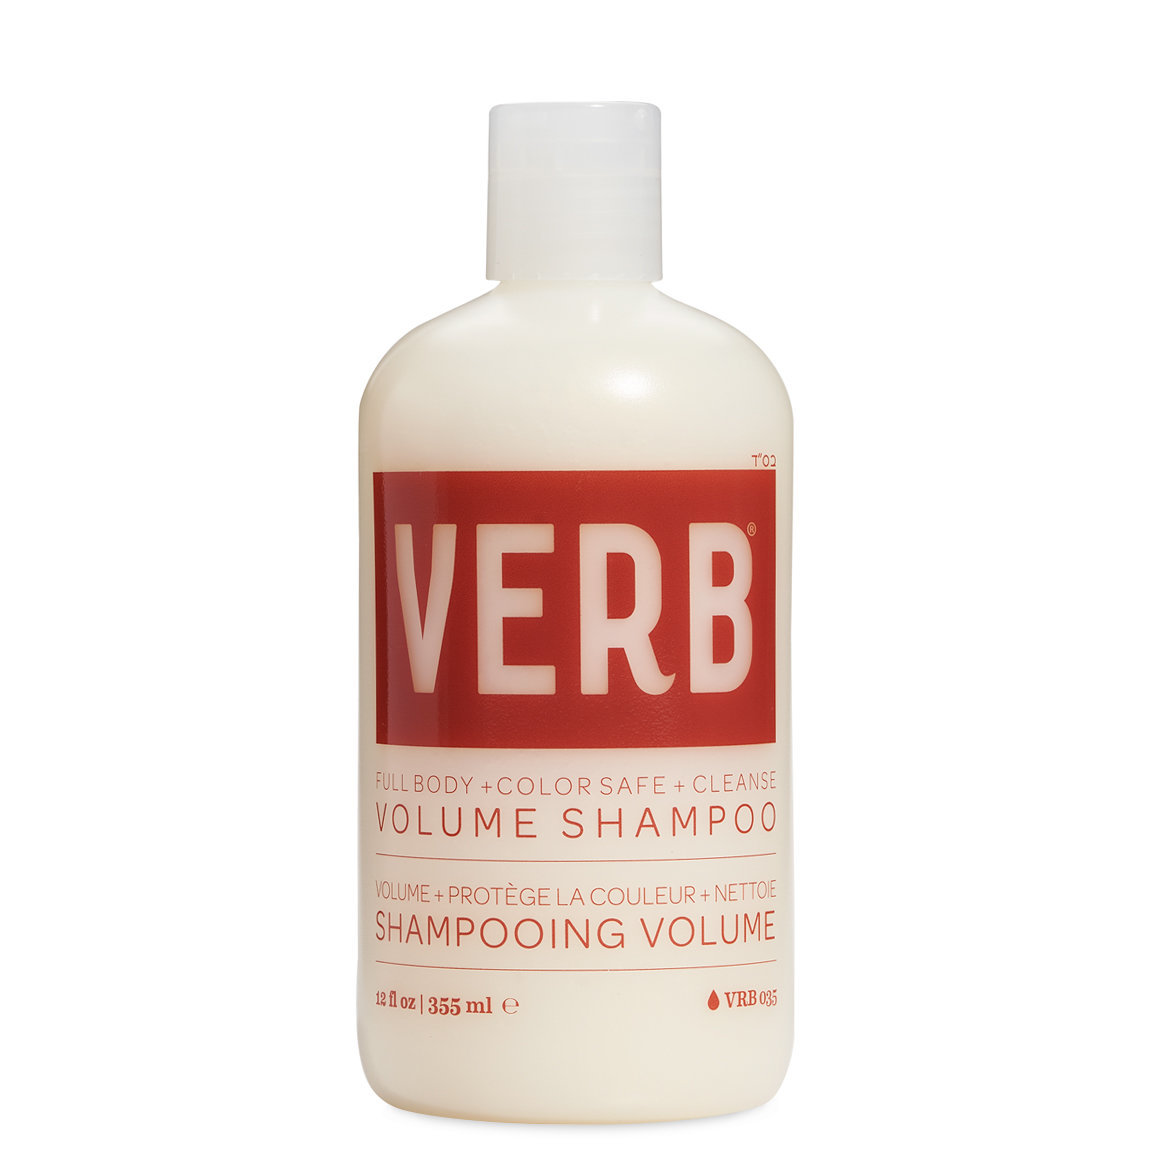 Verb Volume Shampoo 12 fl oz alternative view 1 - product swatch.